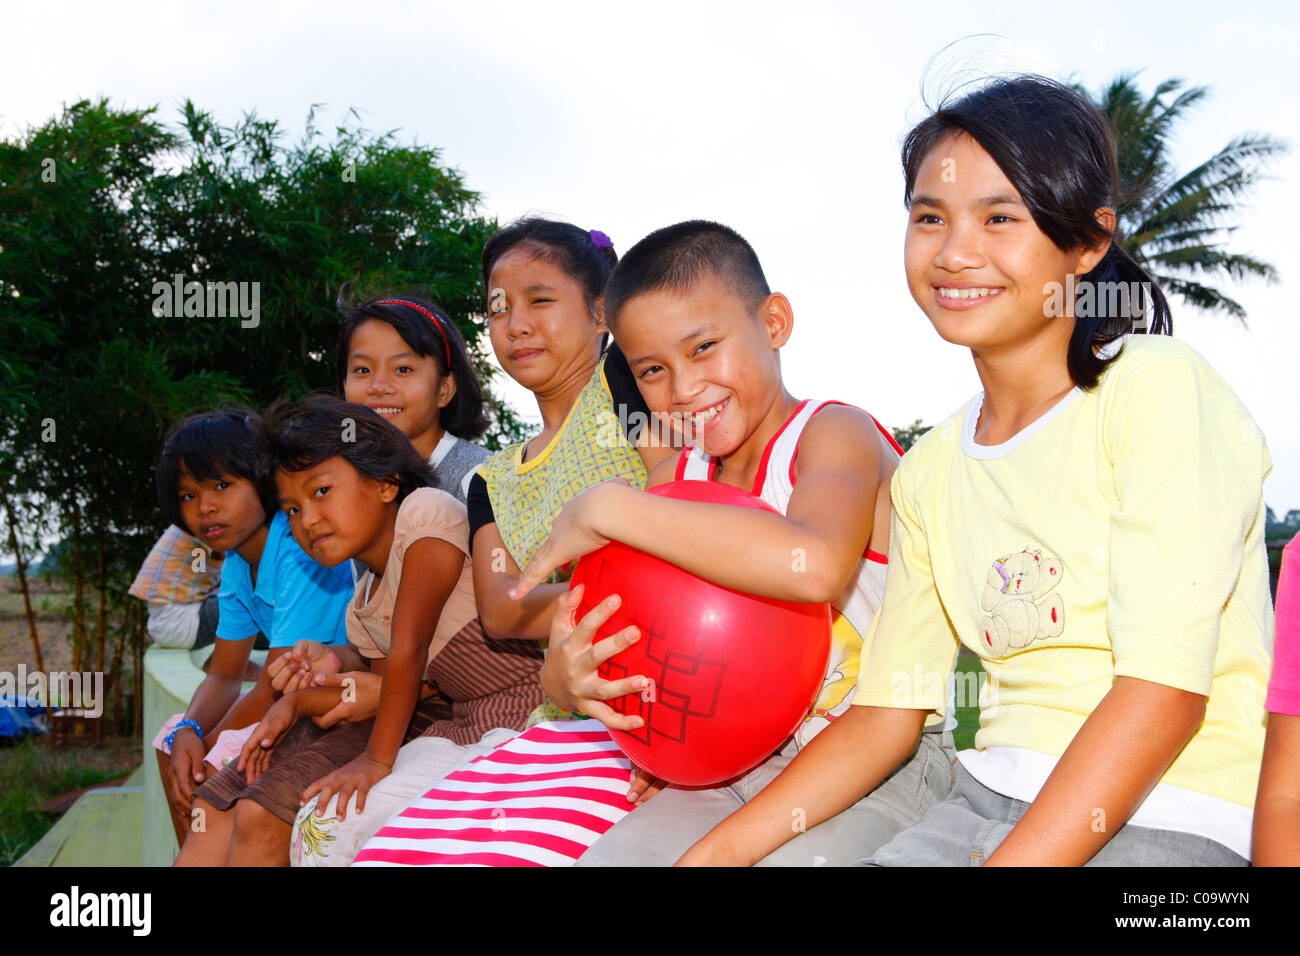 Group of children with a balloon, Margaritha children's home, Marihat, Batak region, Sumatra island, Indonesia, Asia Stock Photo